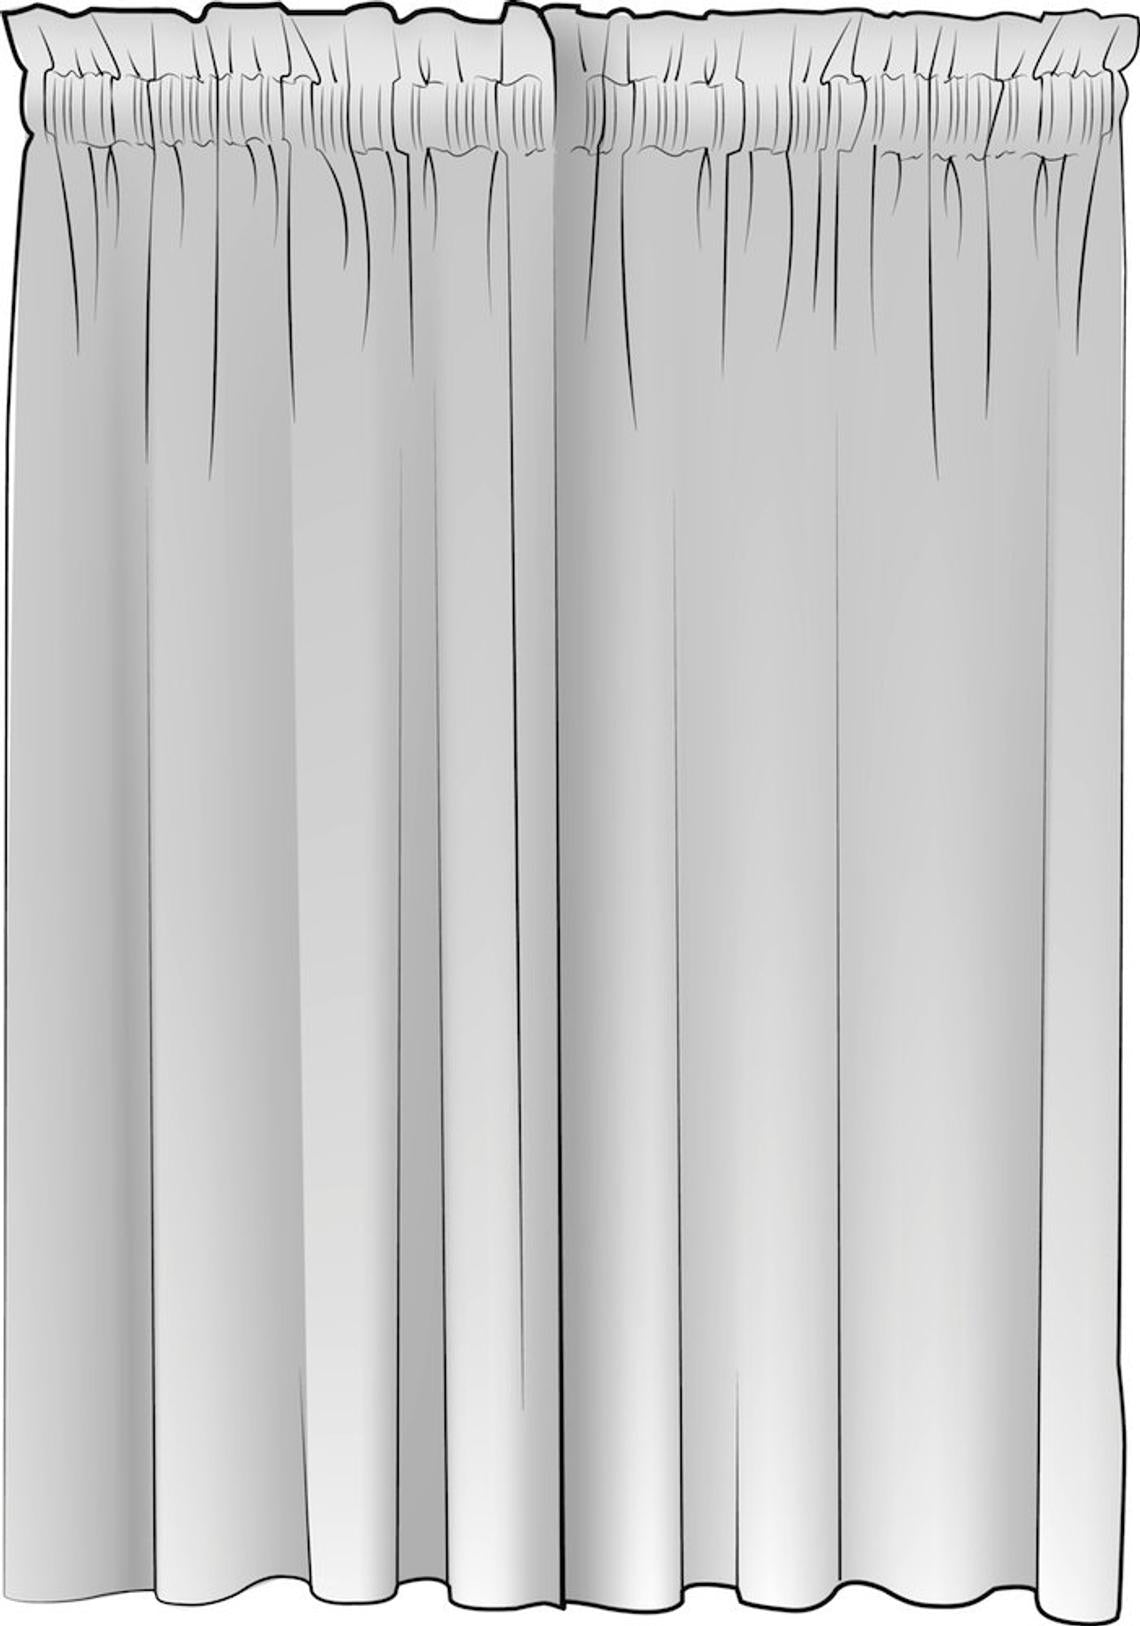 rod pocket curtain panels pair in farmhouse pine green ticking stripe on beige